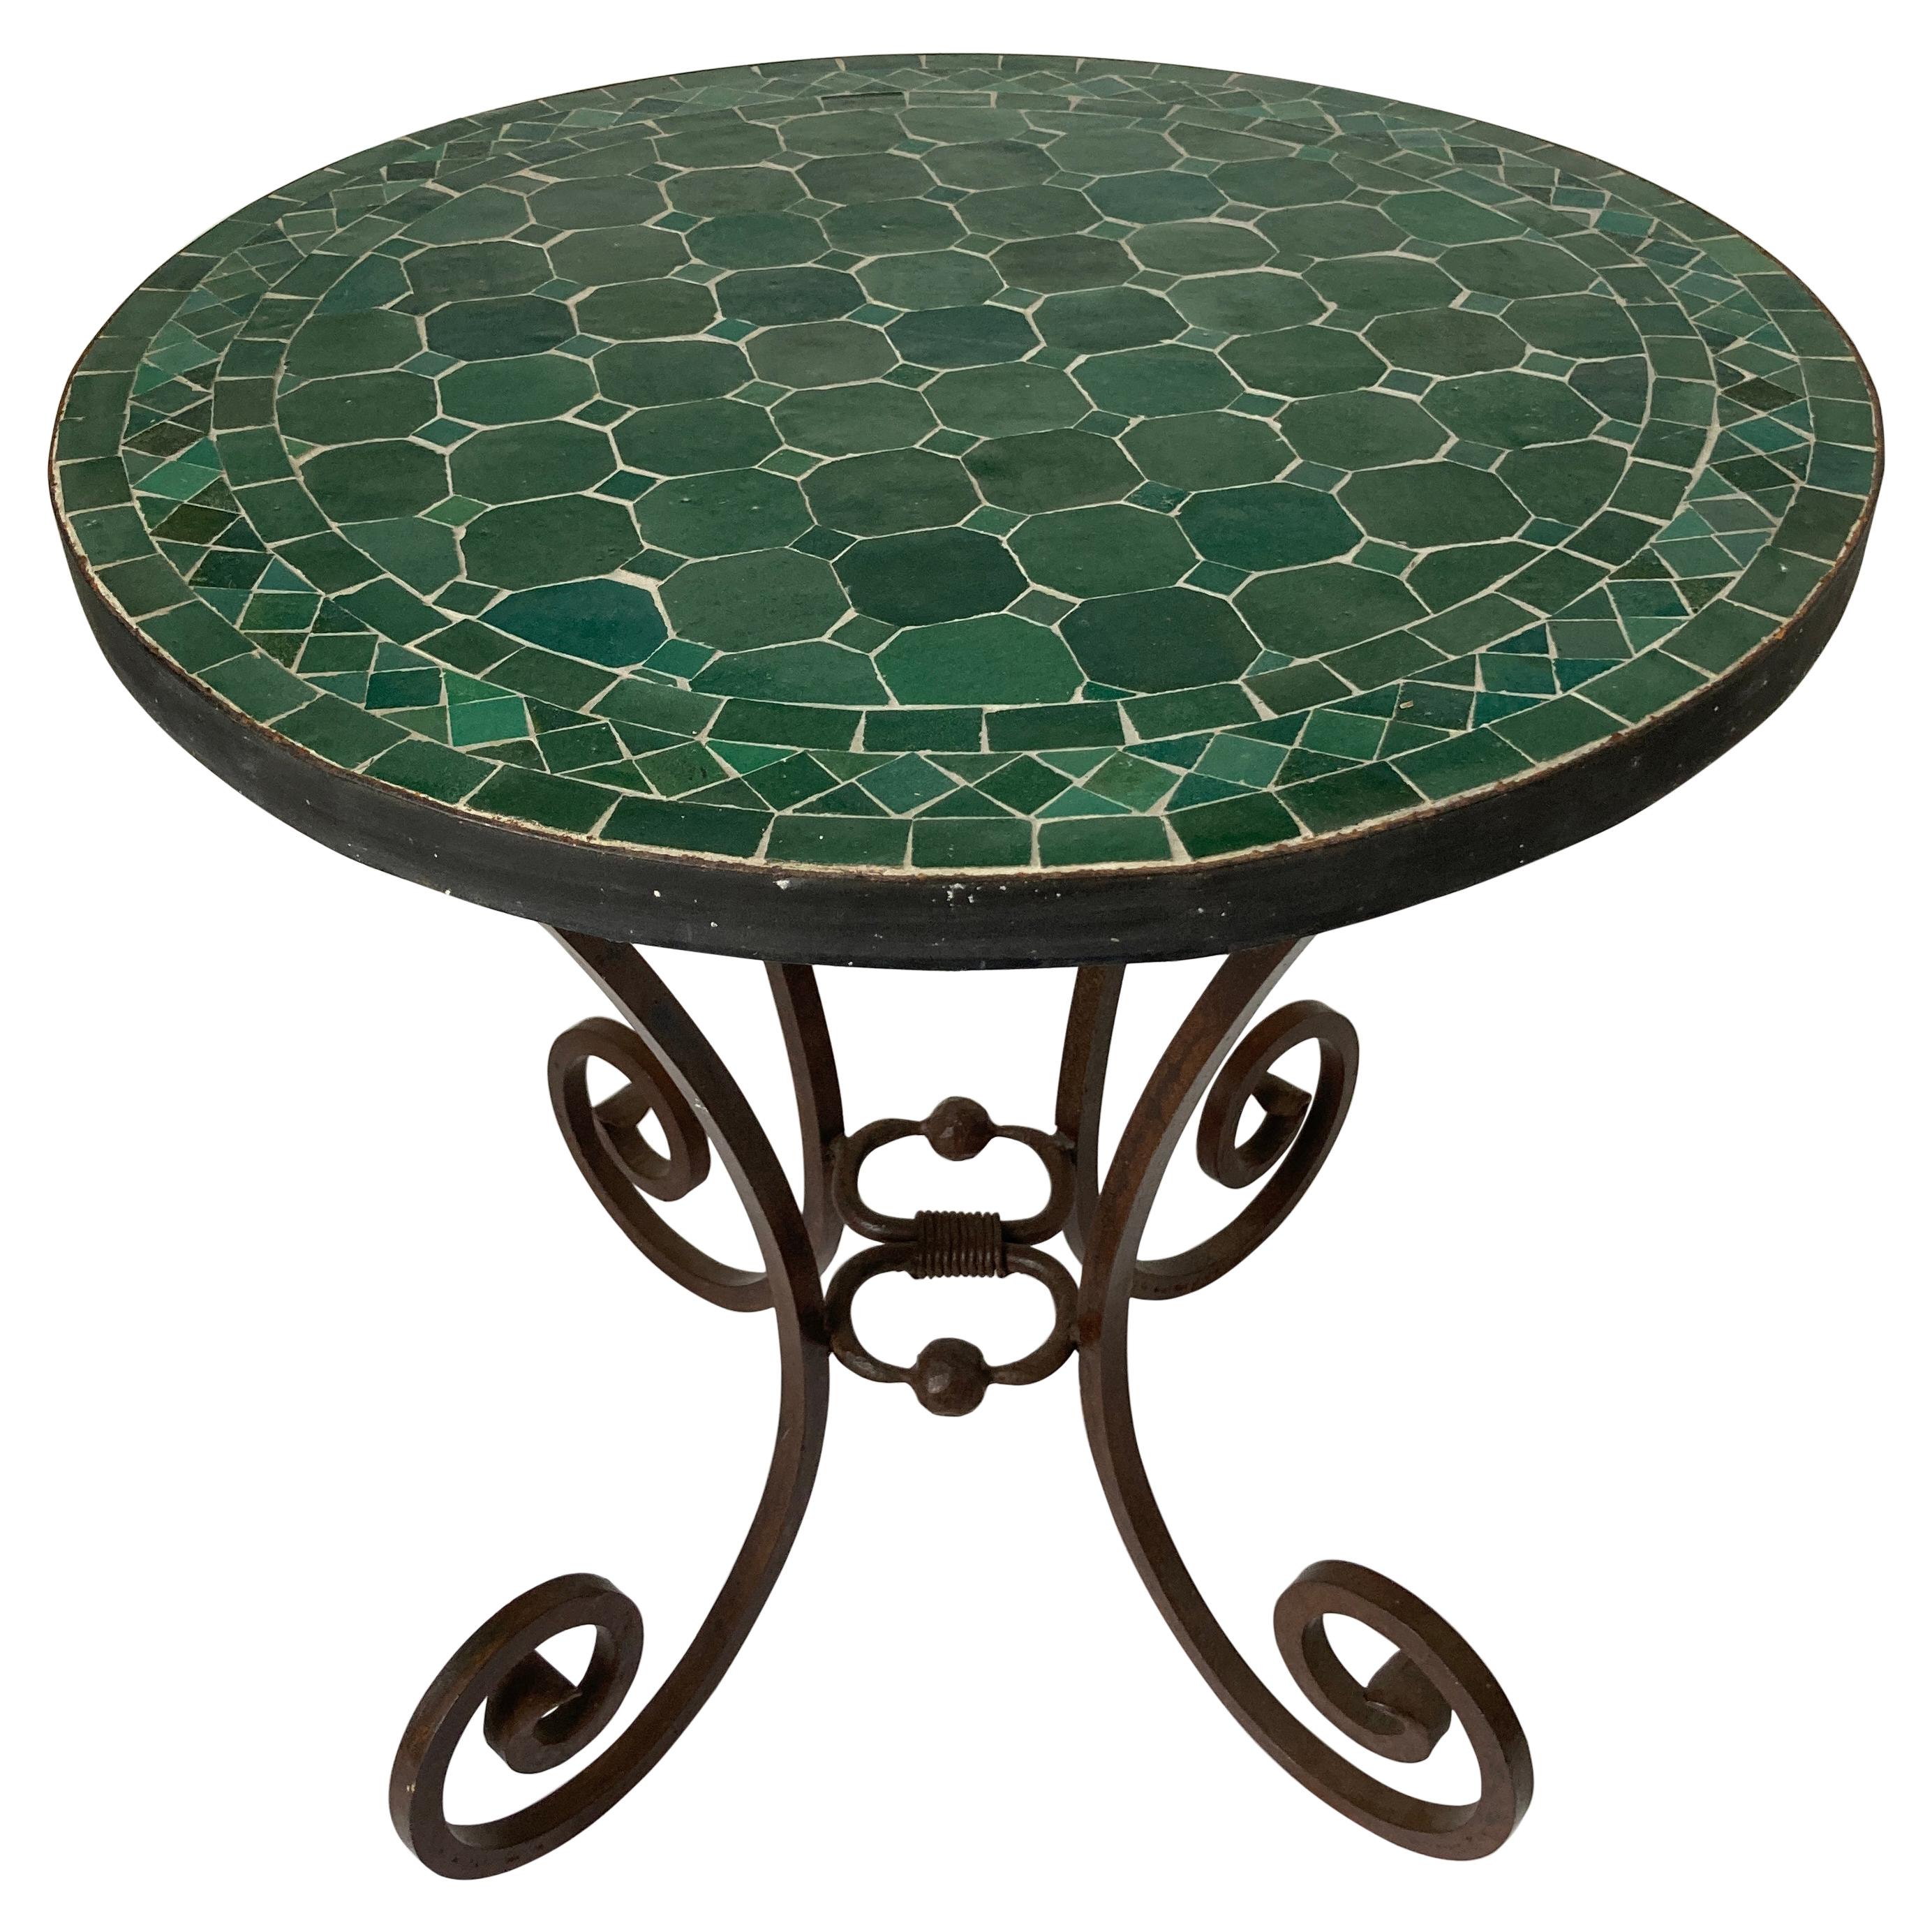 Moroccan Mosaic Tile Emerald Green Color Patio Table